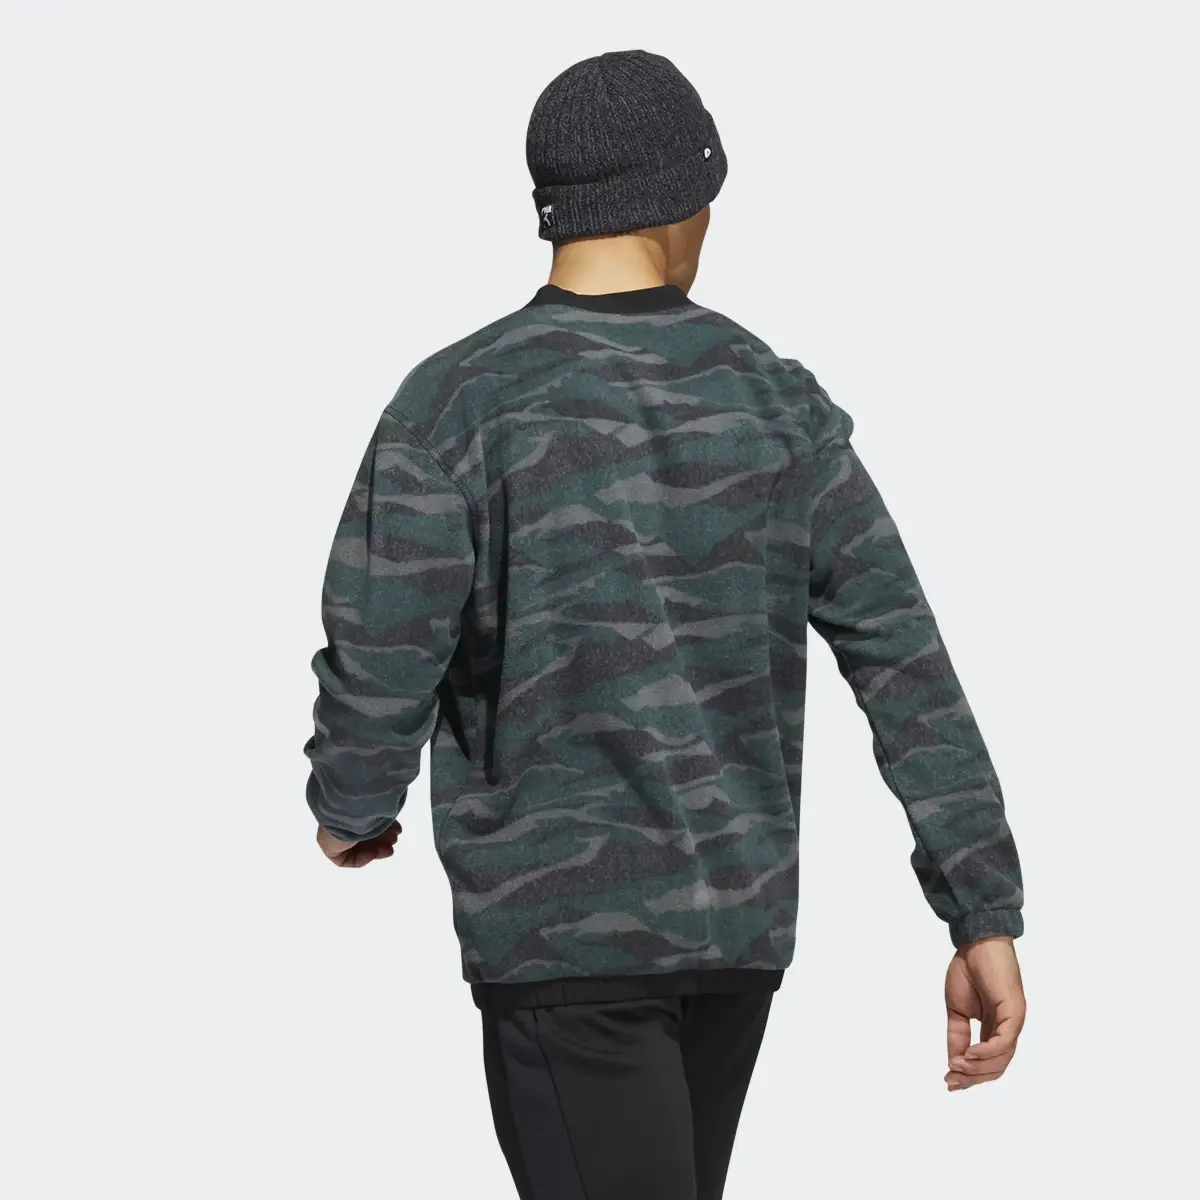 Adidas Texture-Print Sweatshirt. 3